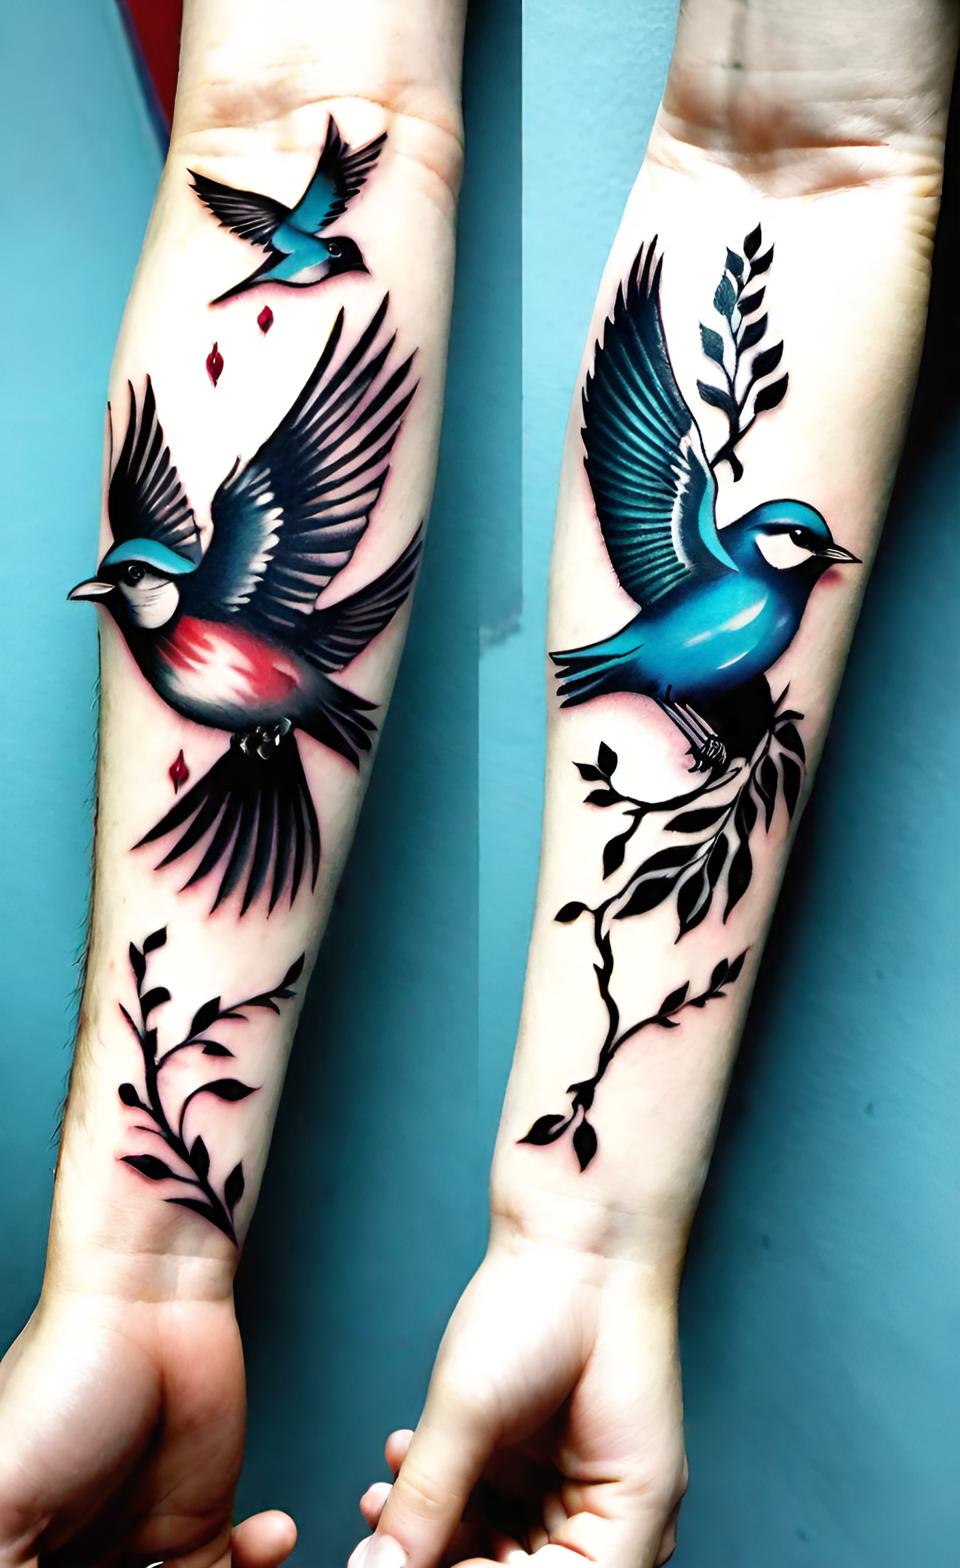 Script 33 tattoo ideas with small birds around it